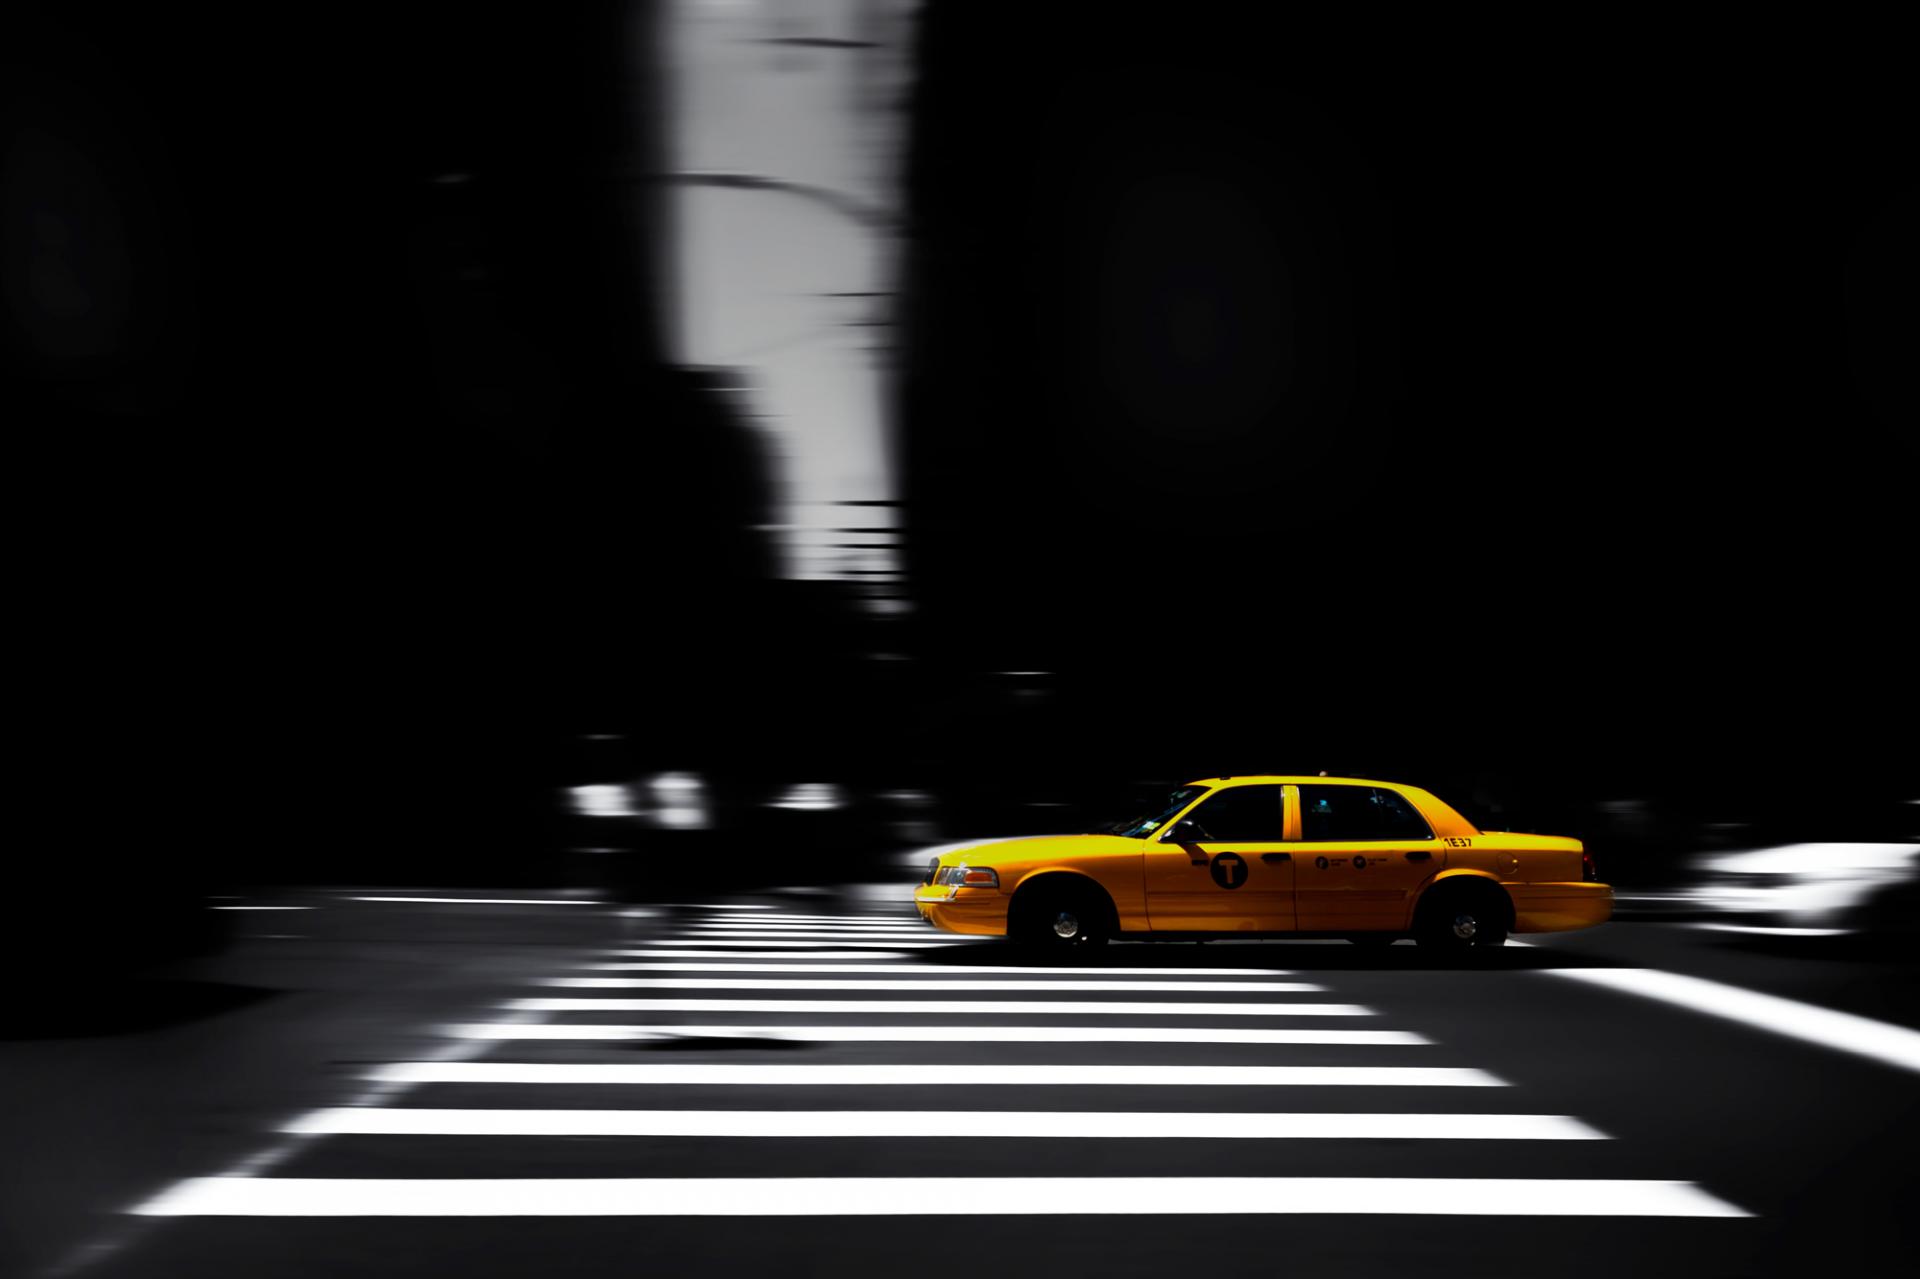 New York Photography Awards Winner - Yellow Cab